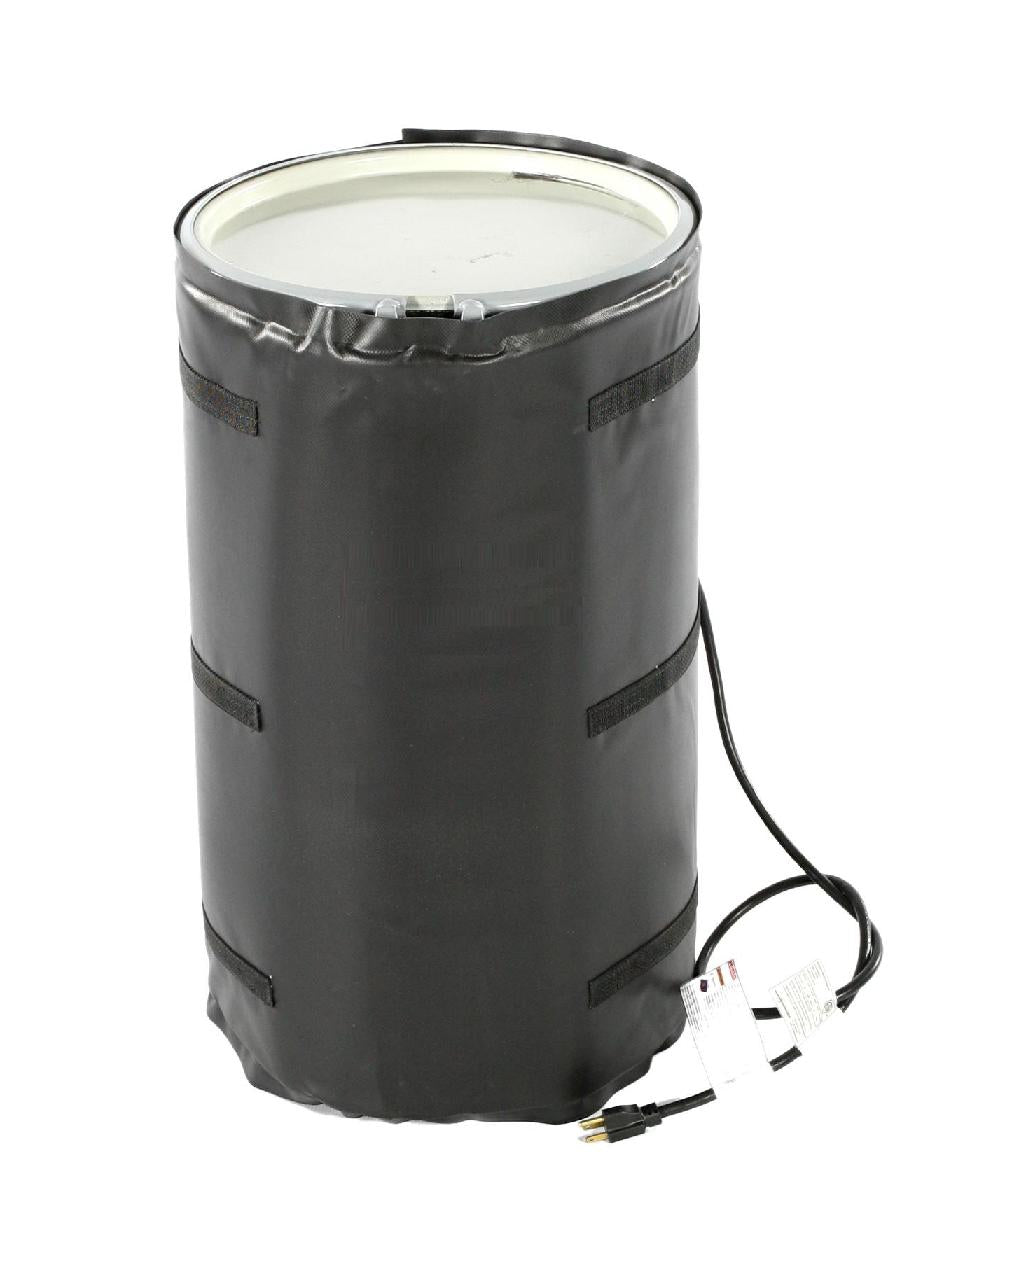 15 Gallon Insulated Drum Heater BH15RR